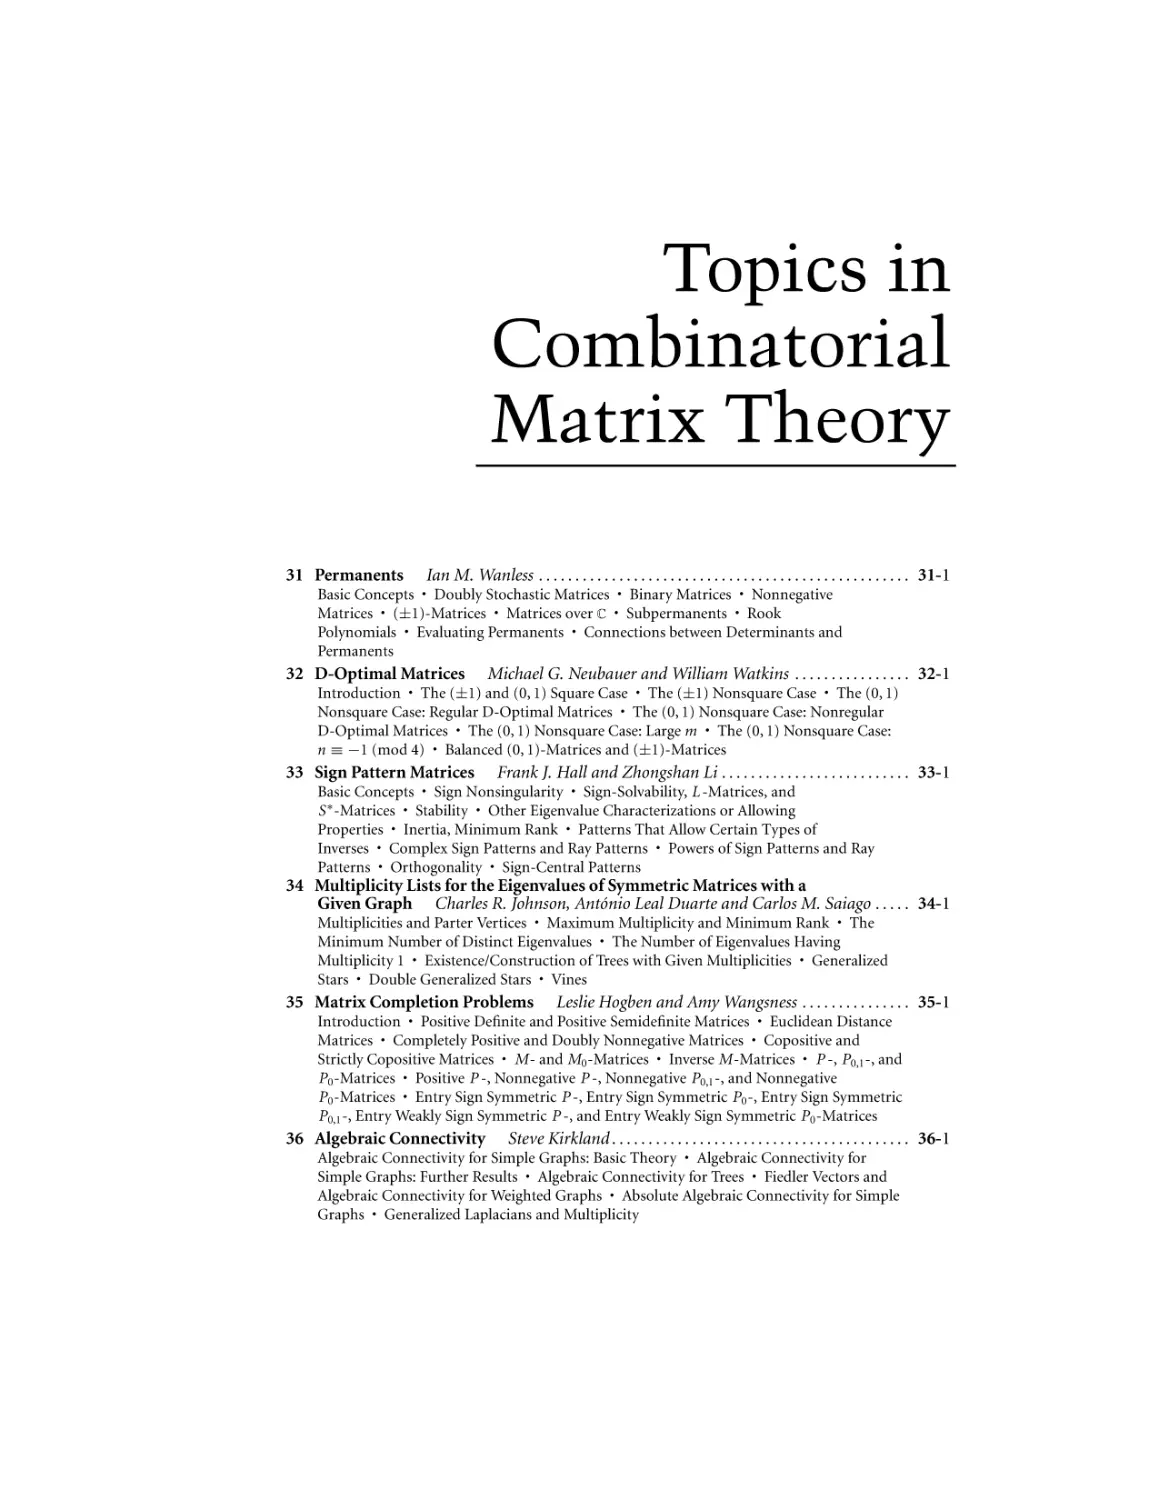 Topics in Combinatorial Matrix Theory